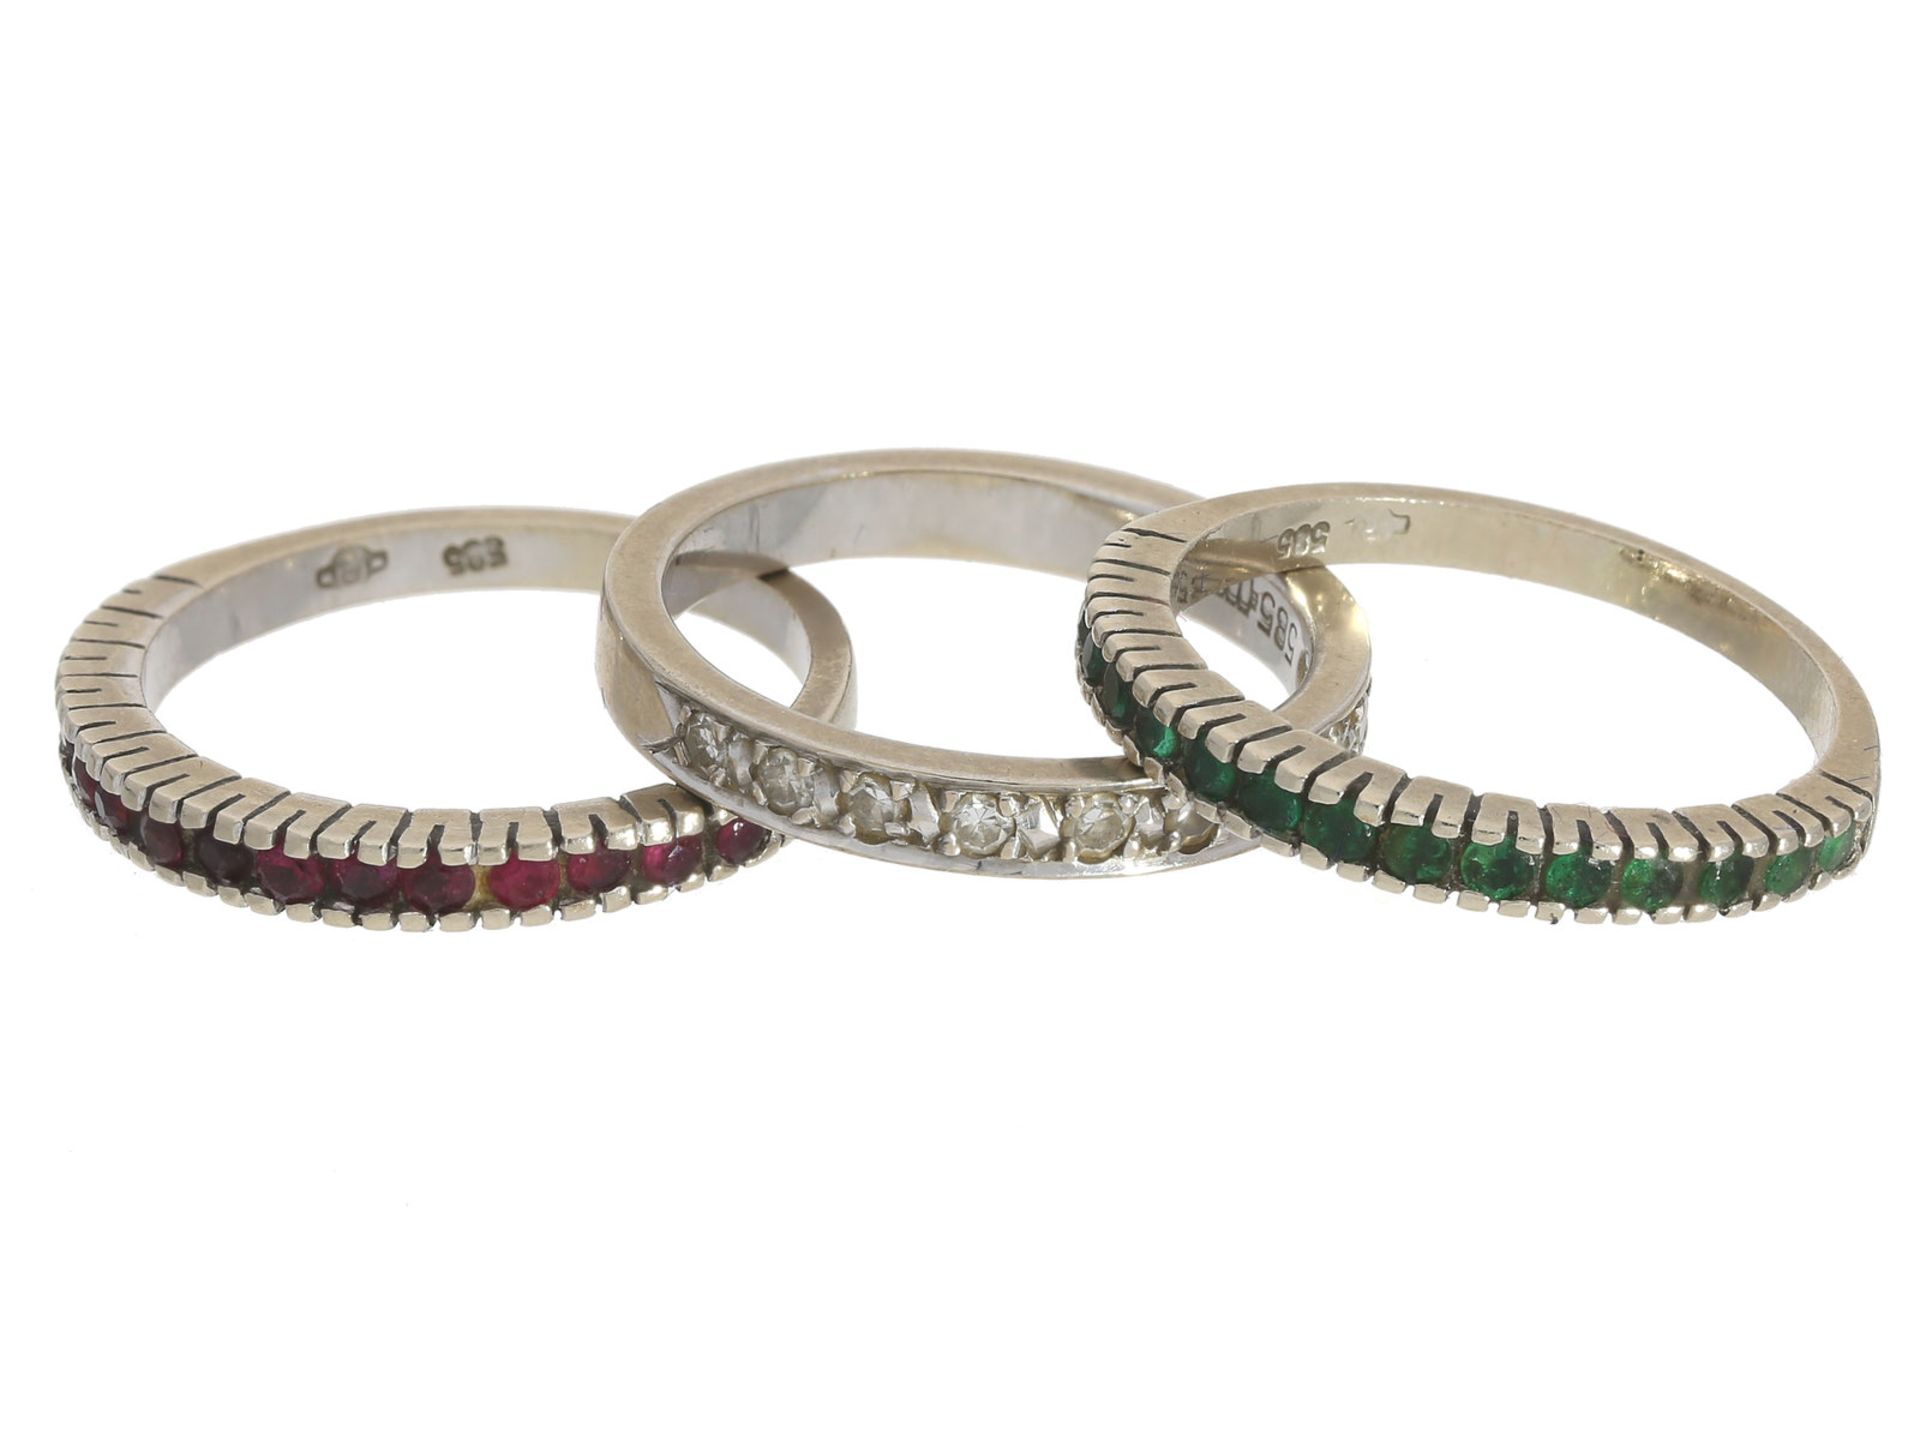 Ring: vintage Goldschmiederinge mit Rubin-/Smaragd- sowie DiamantbesatzInsgesamt 3 Ringe,